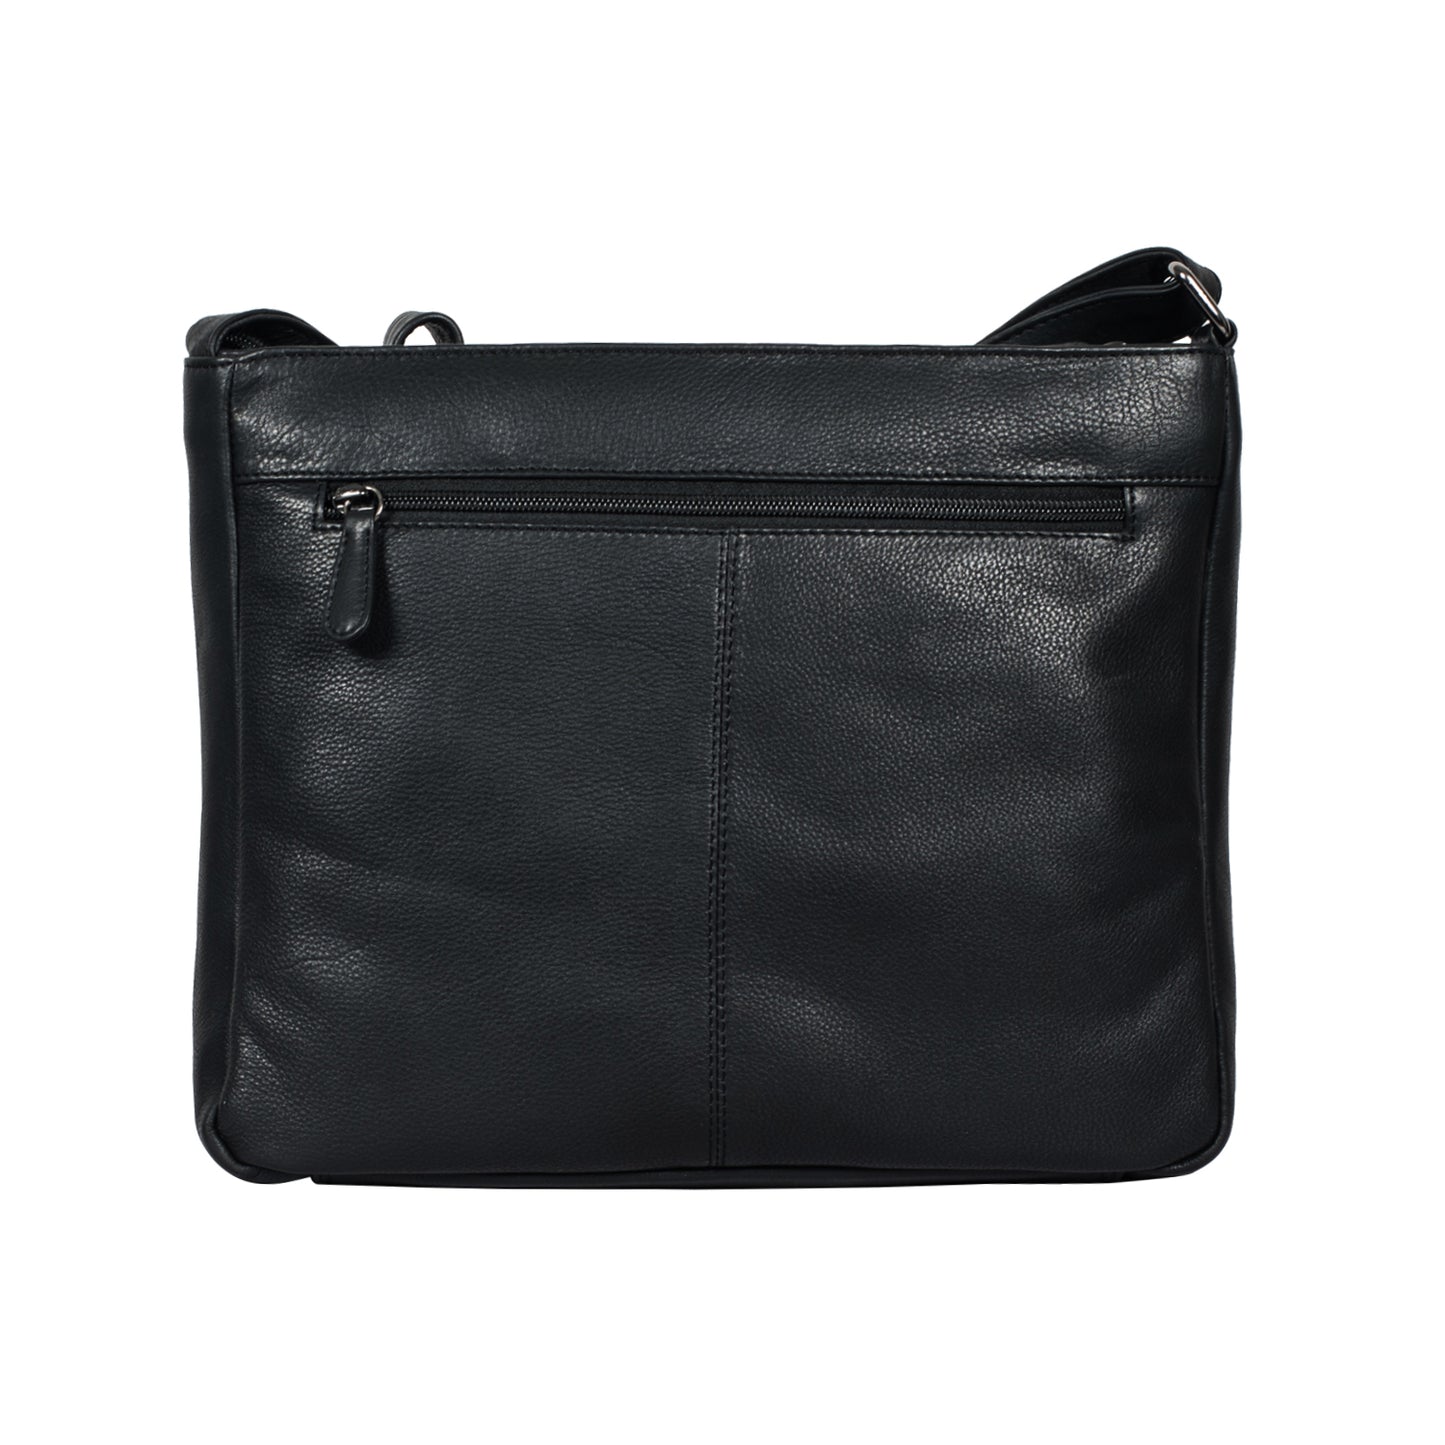 Calfnero Genuine Leather Women's Sling Bag (71686A-Black)